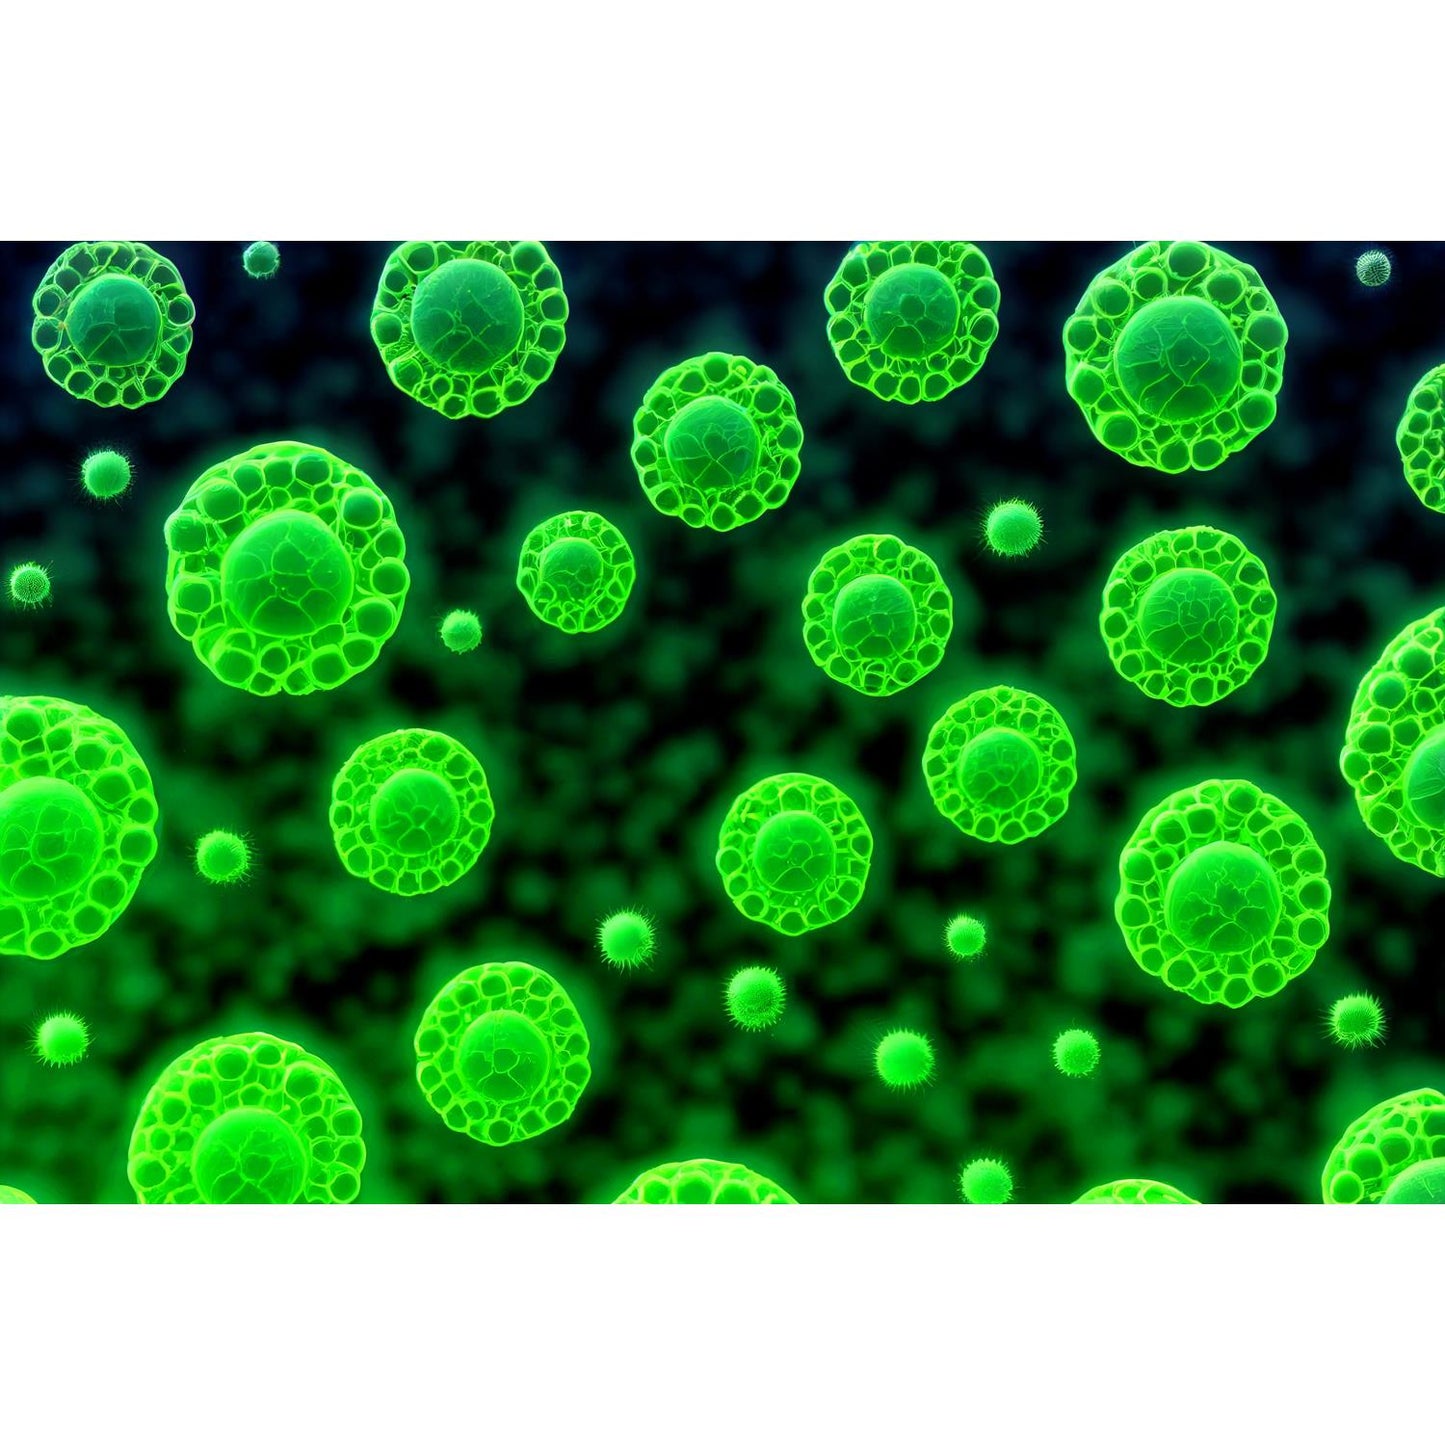 Medical Office Art - Green bacteria cells